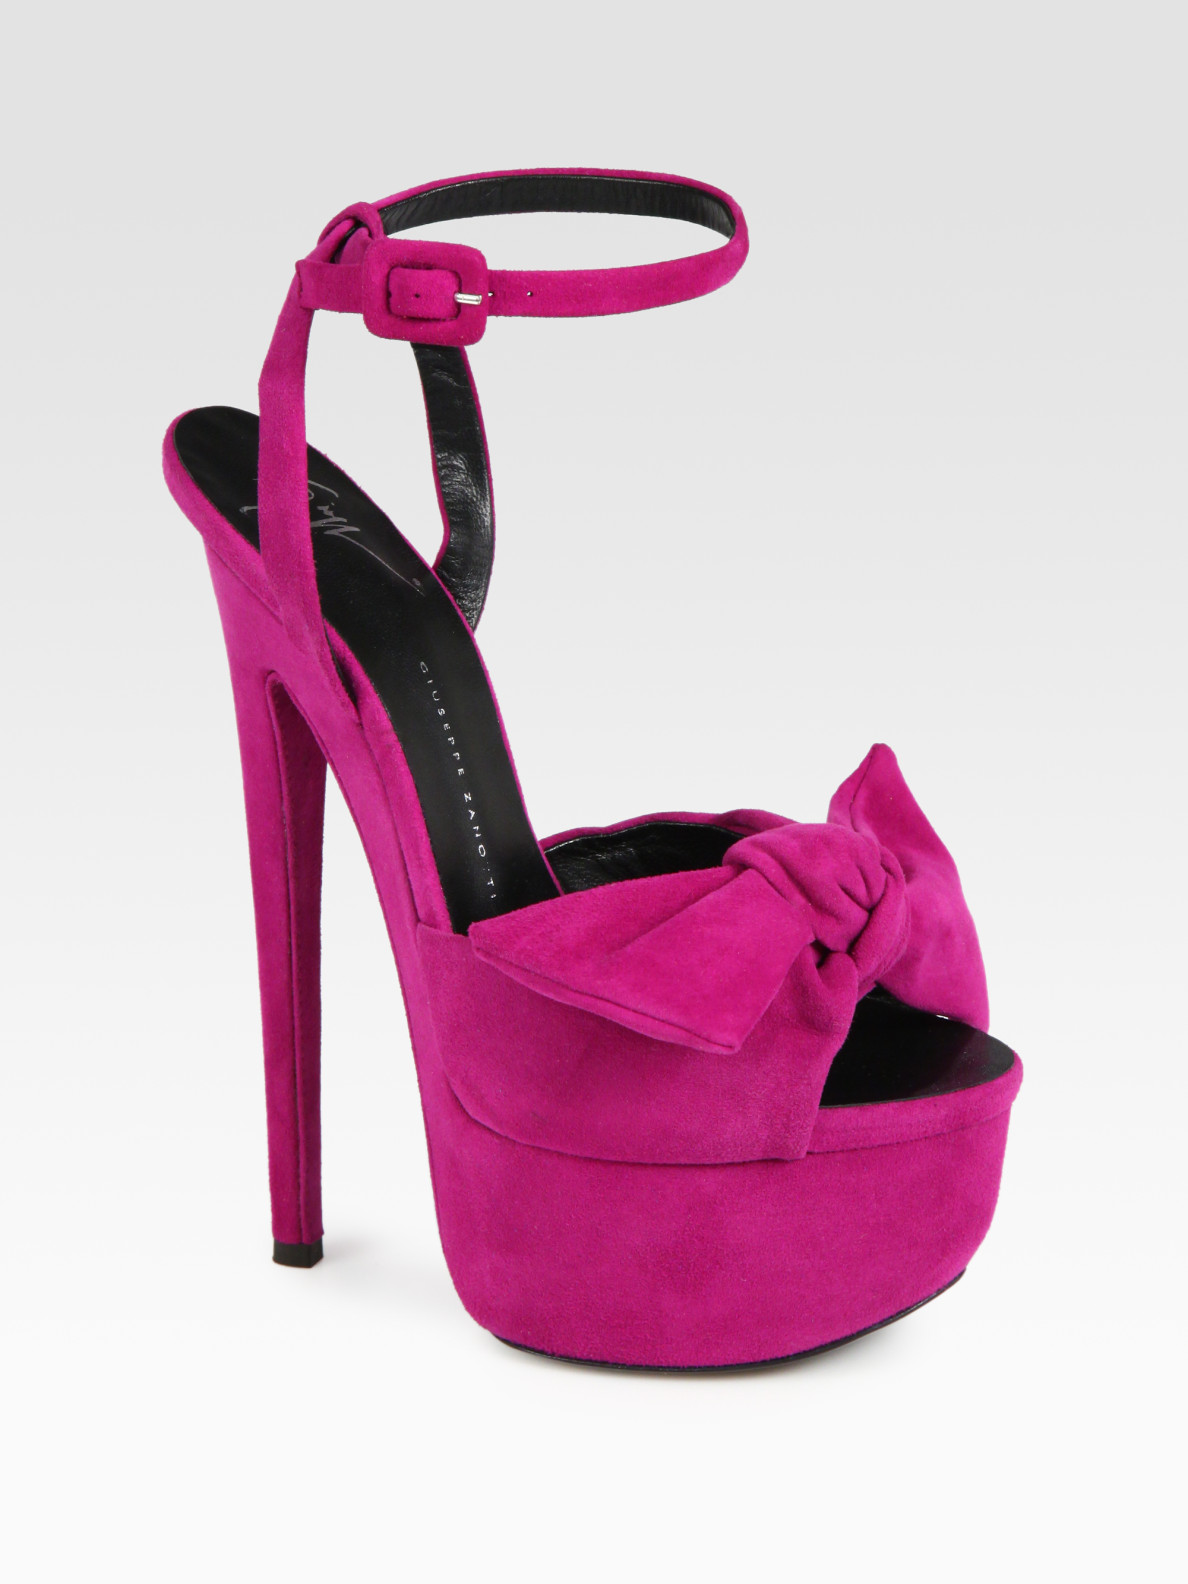 Lyst - Giuseppe zanotti Suede Bow Platform Sandals in Purple